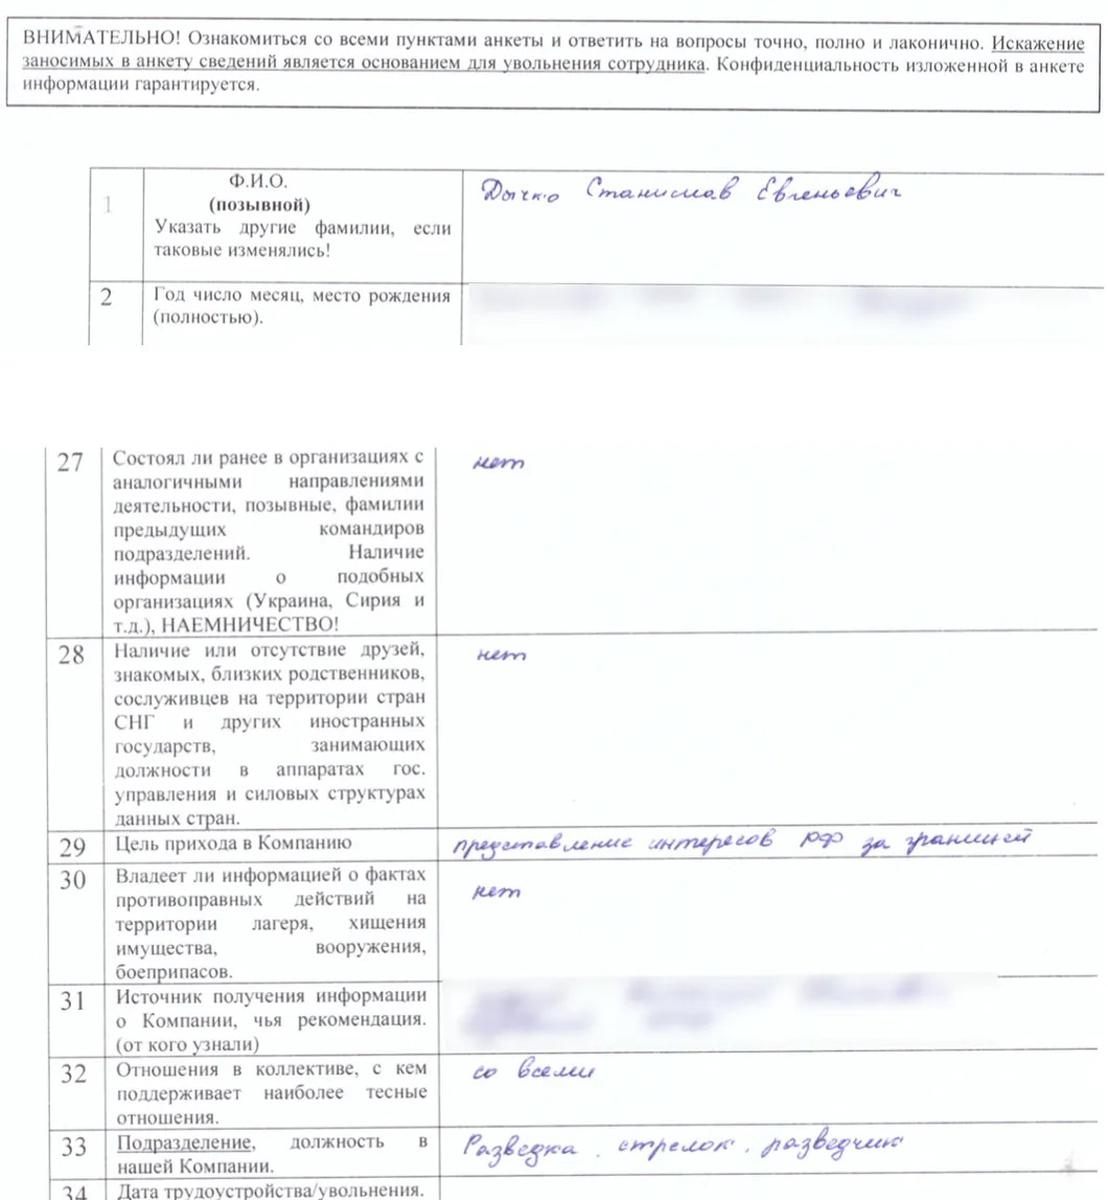 Фрагмент кадровой анкеты Дычко